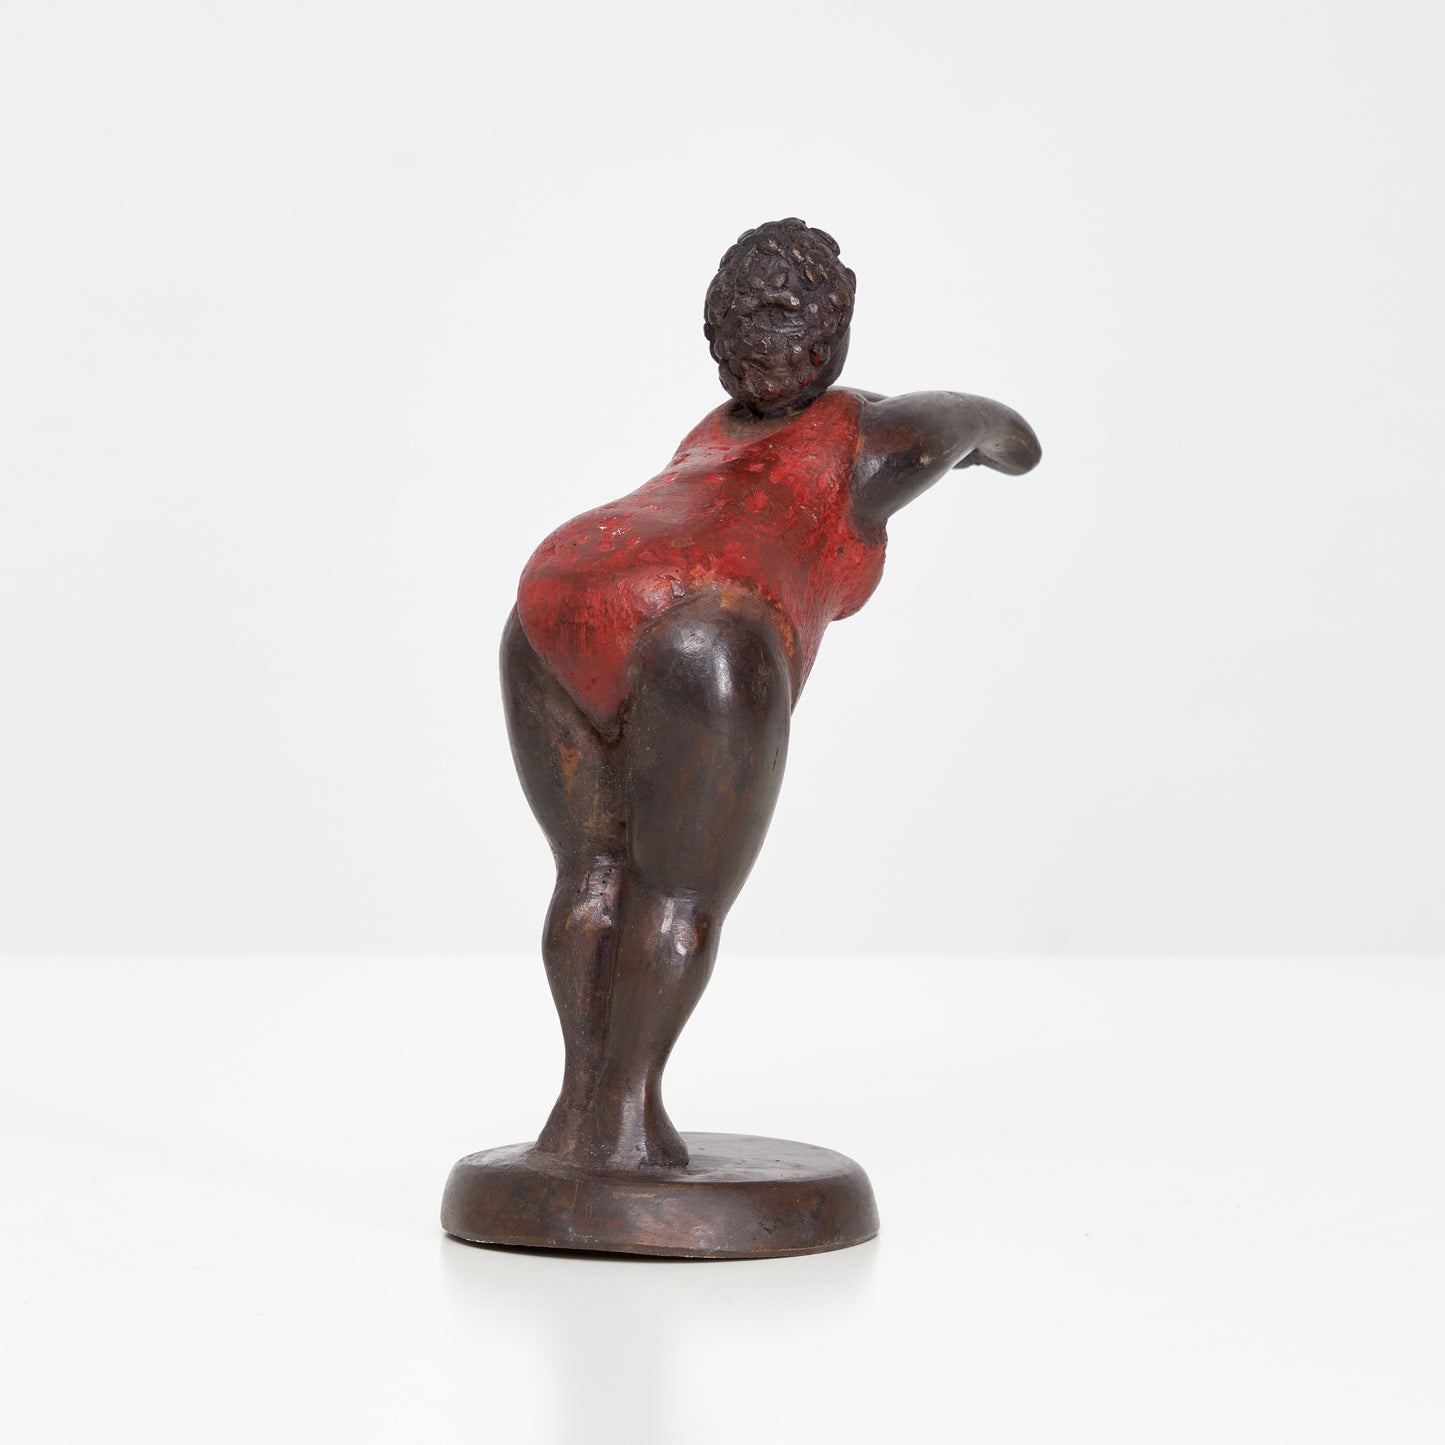 Bronze-Skulptur "Bobaraba Plongeuse" Schwimmerin | by Soré | 19cm 1kg